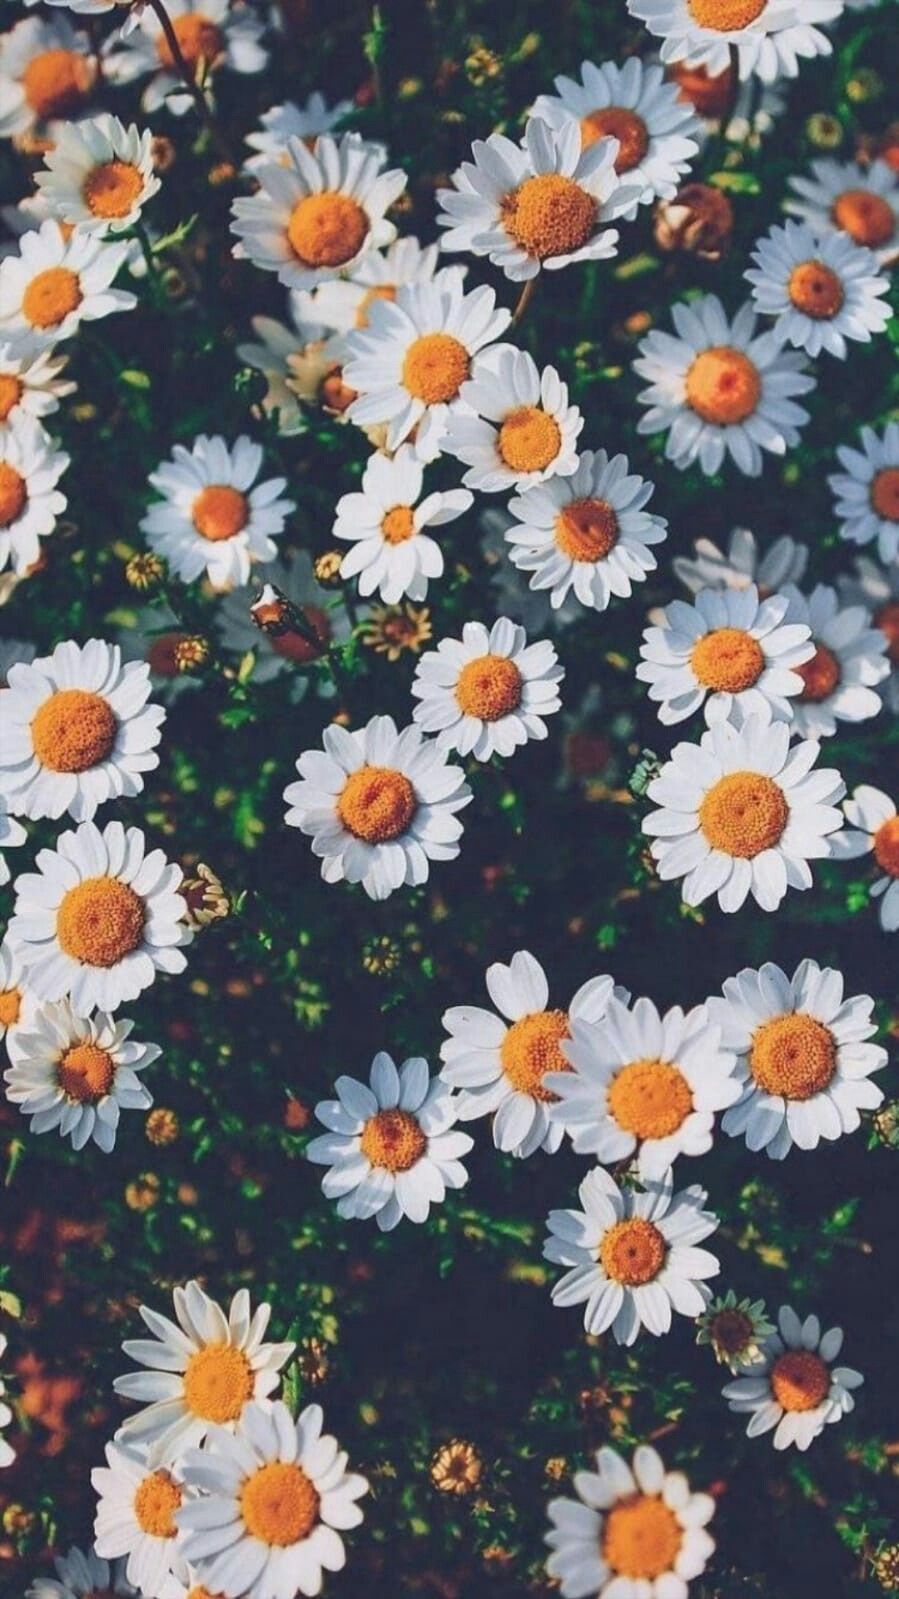 en güzel wallpaper,flower,flowering plant,plant,daisy,floral design